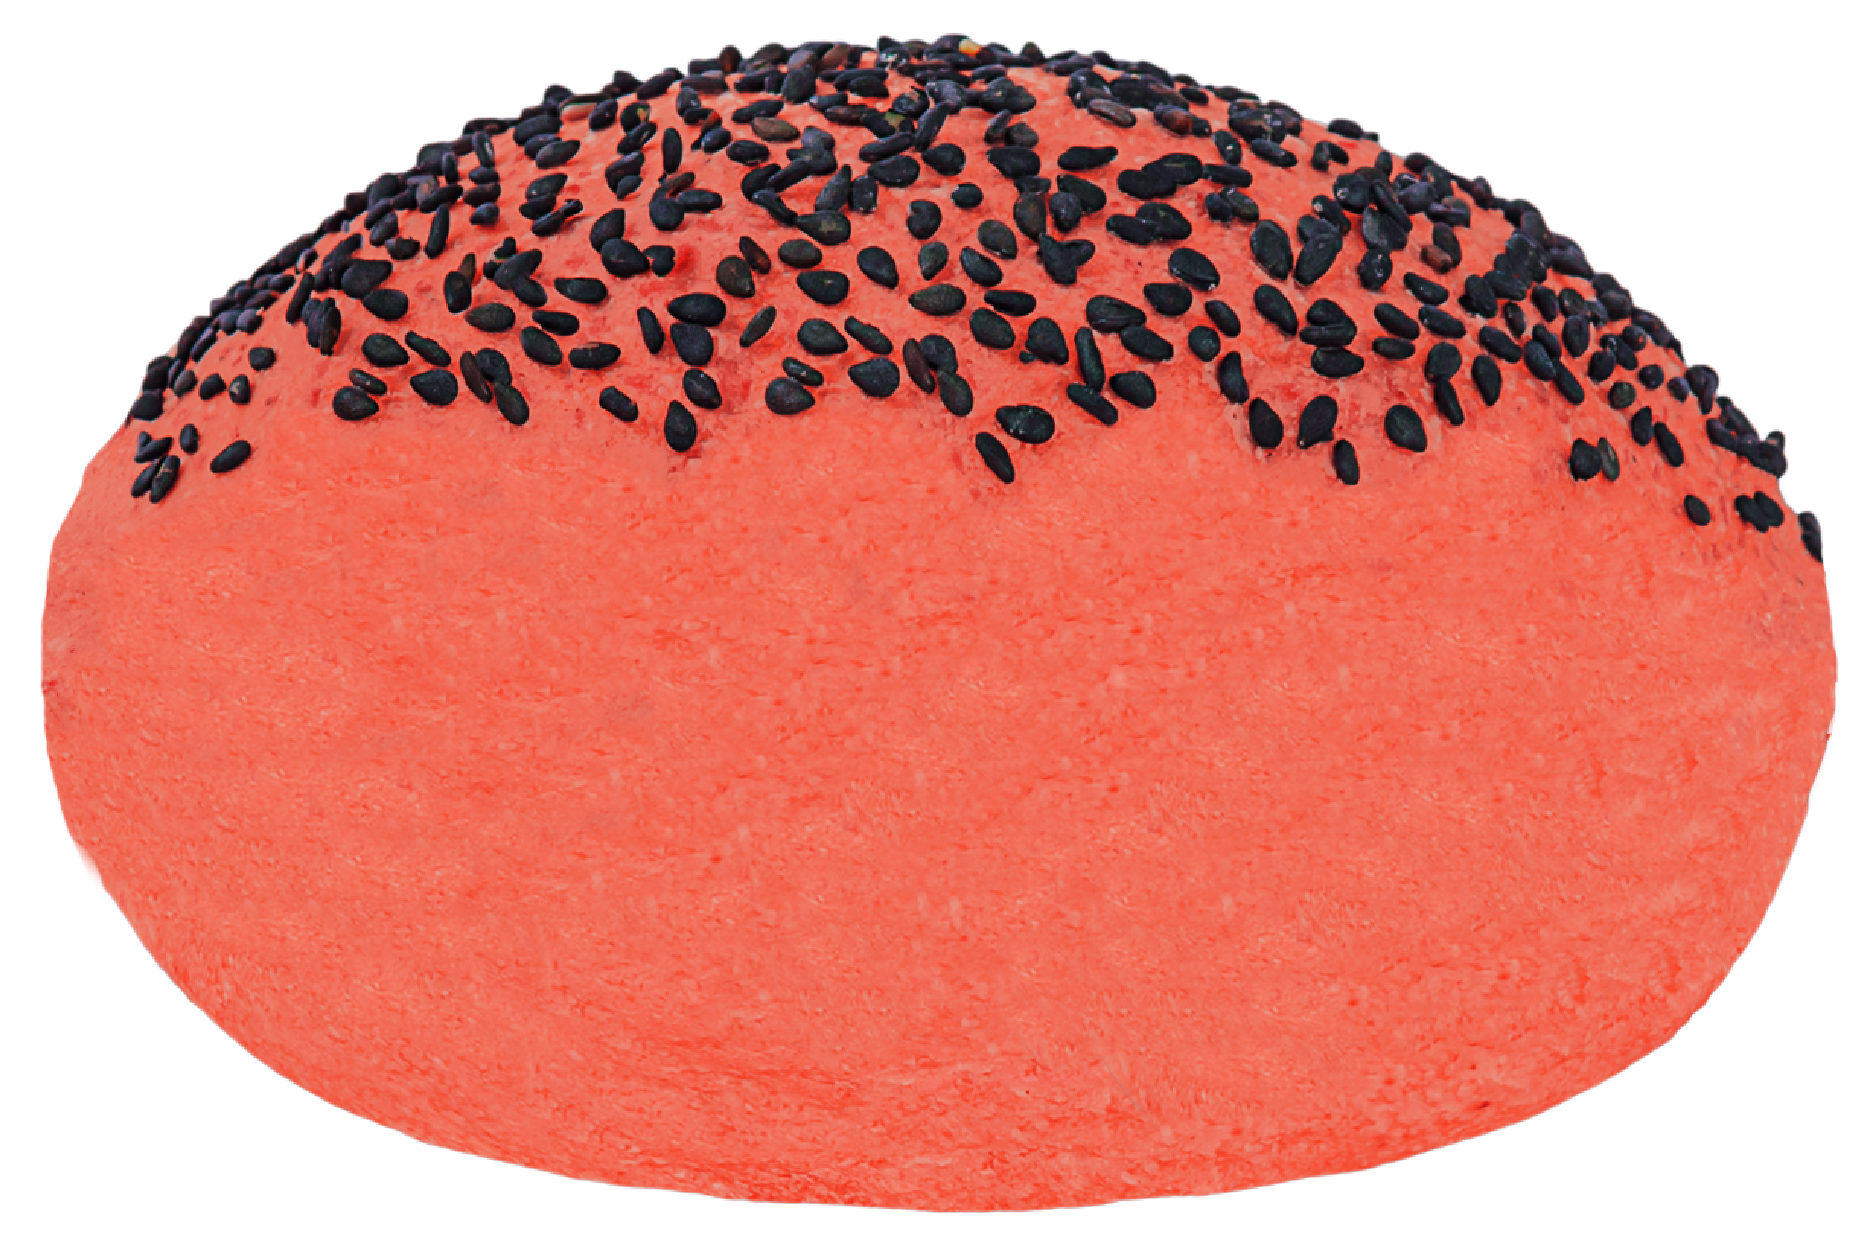 Red bun with black sesame seeds